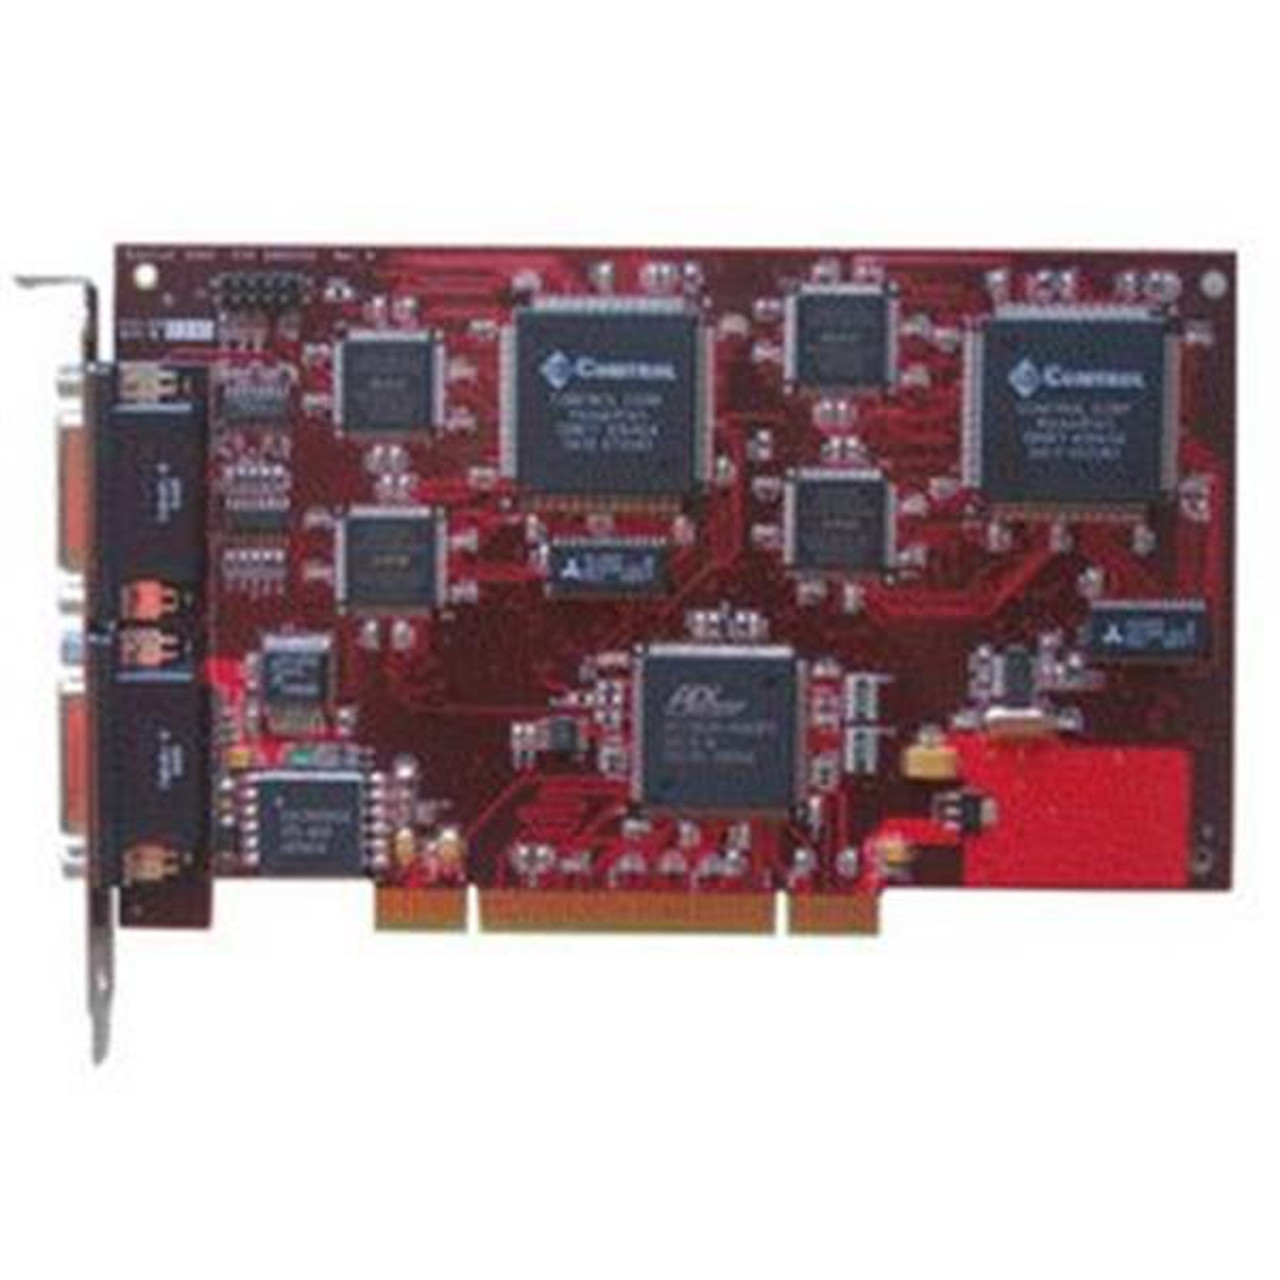 99356-8 Comtrol RocketPort Universal PCI 32-Port Multiport Serial Adapter 32 x RS-232/422 Serial Via Cable Plug-in Card (Refurbished)